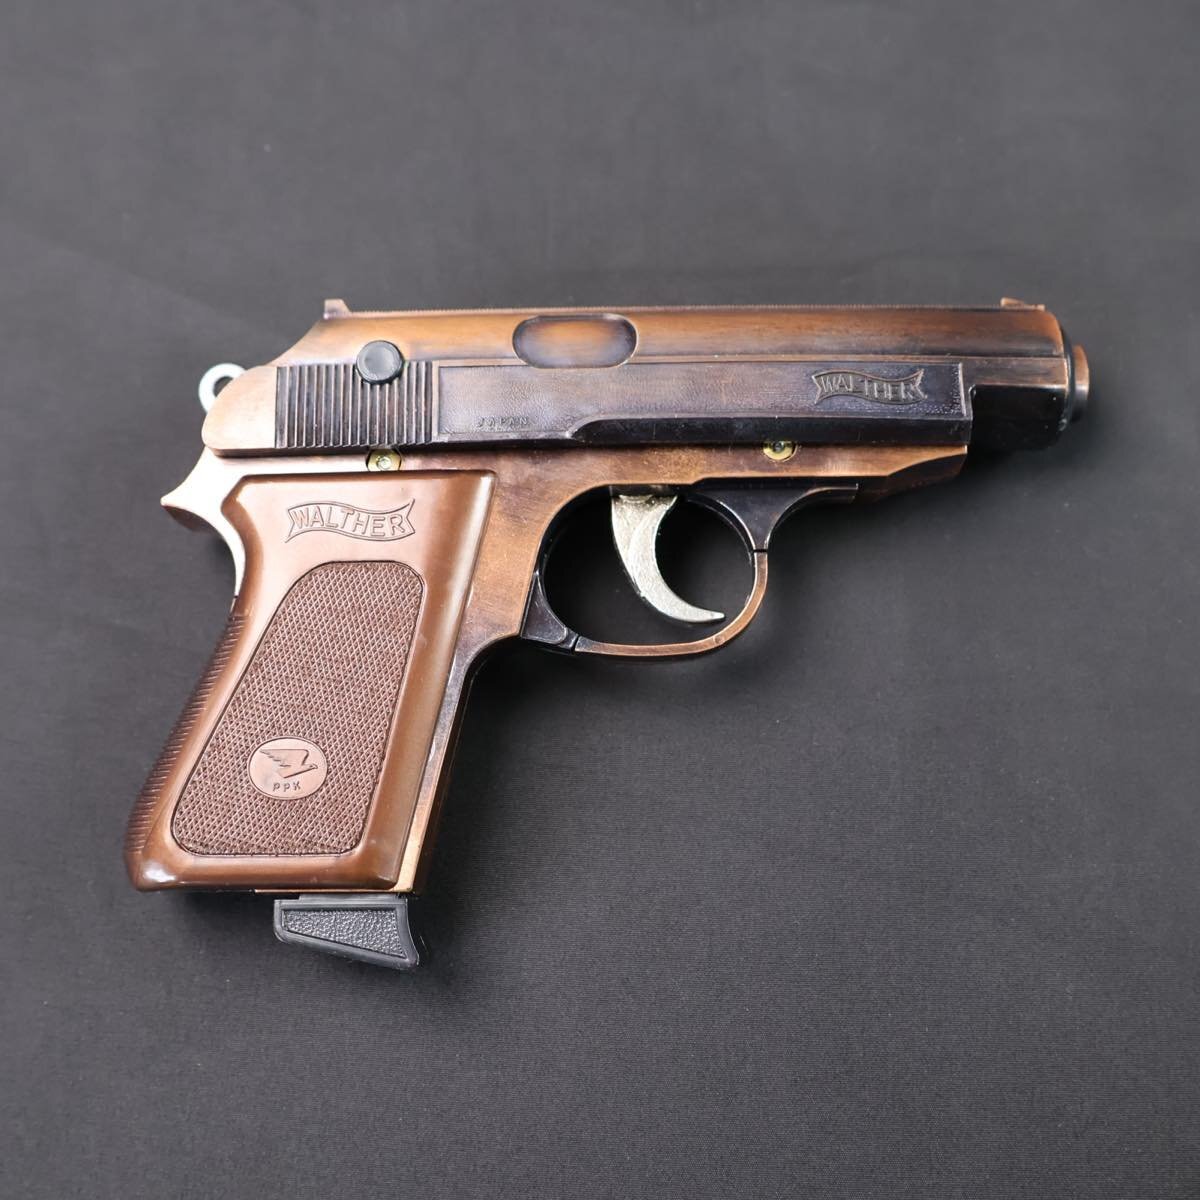  Masudaya Falcon WALTHER-PPK BRwarusa-PPK toy gun #S-8531